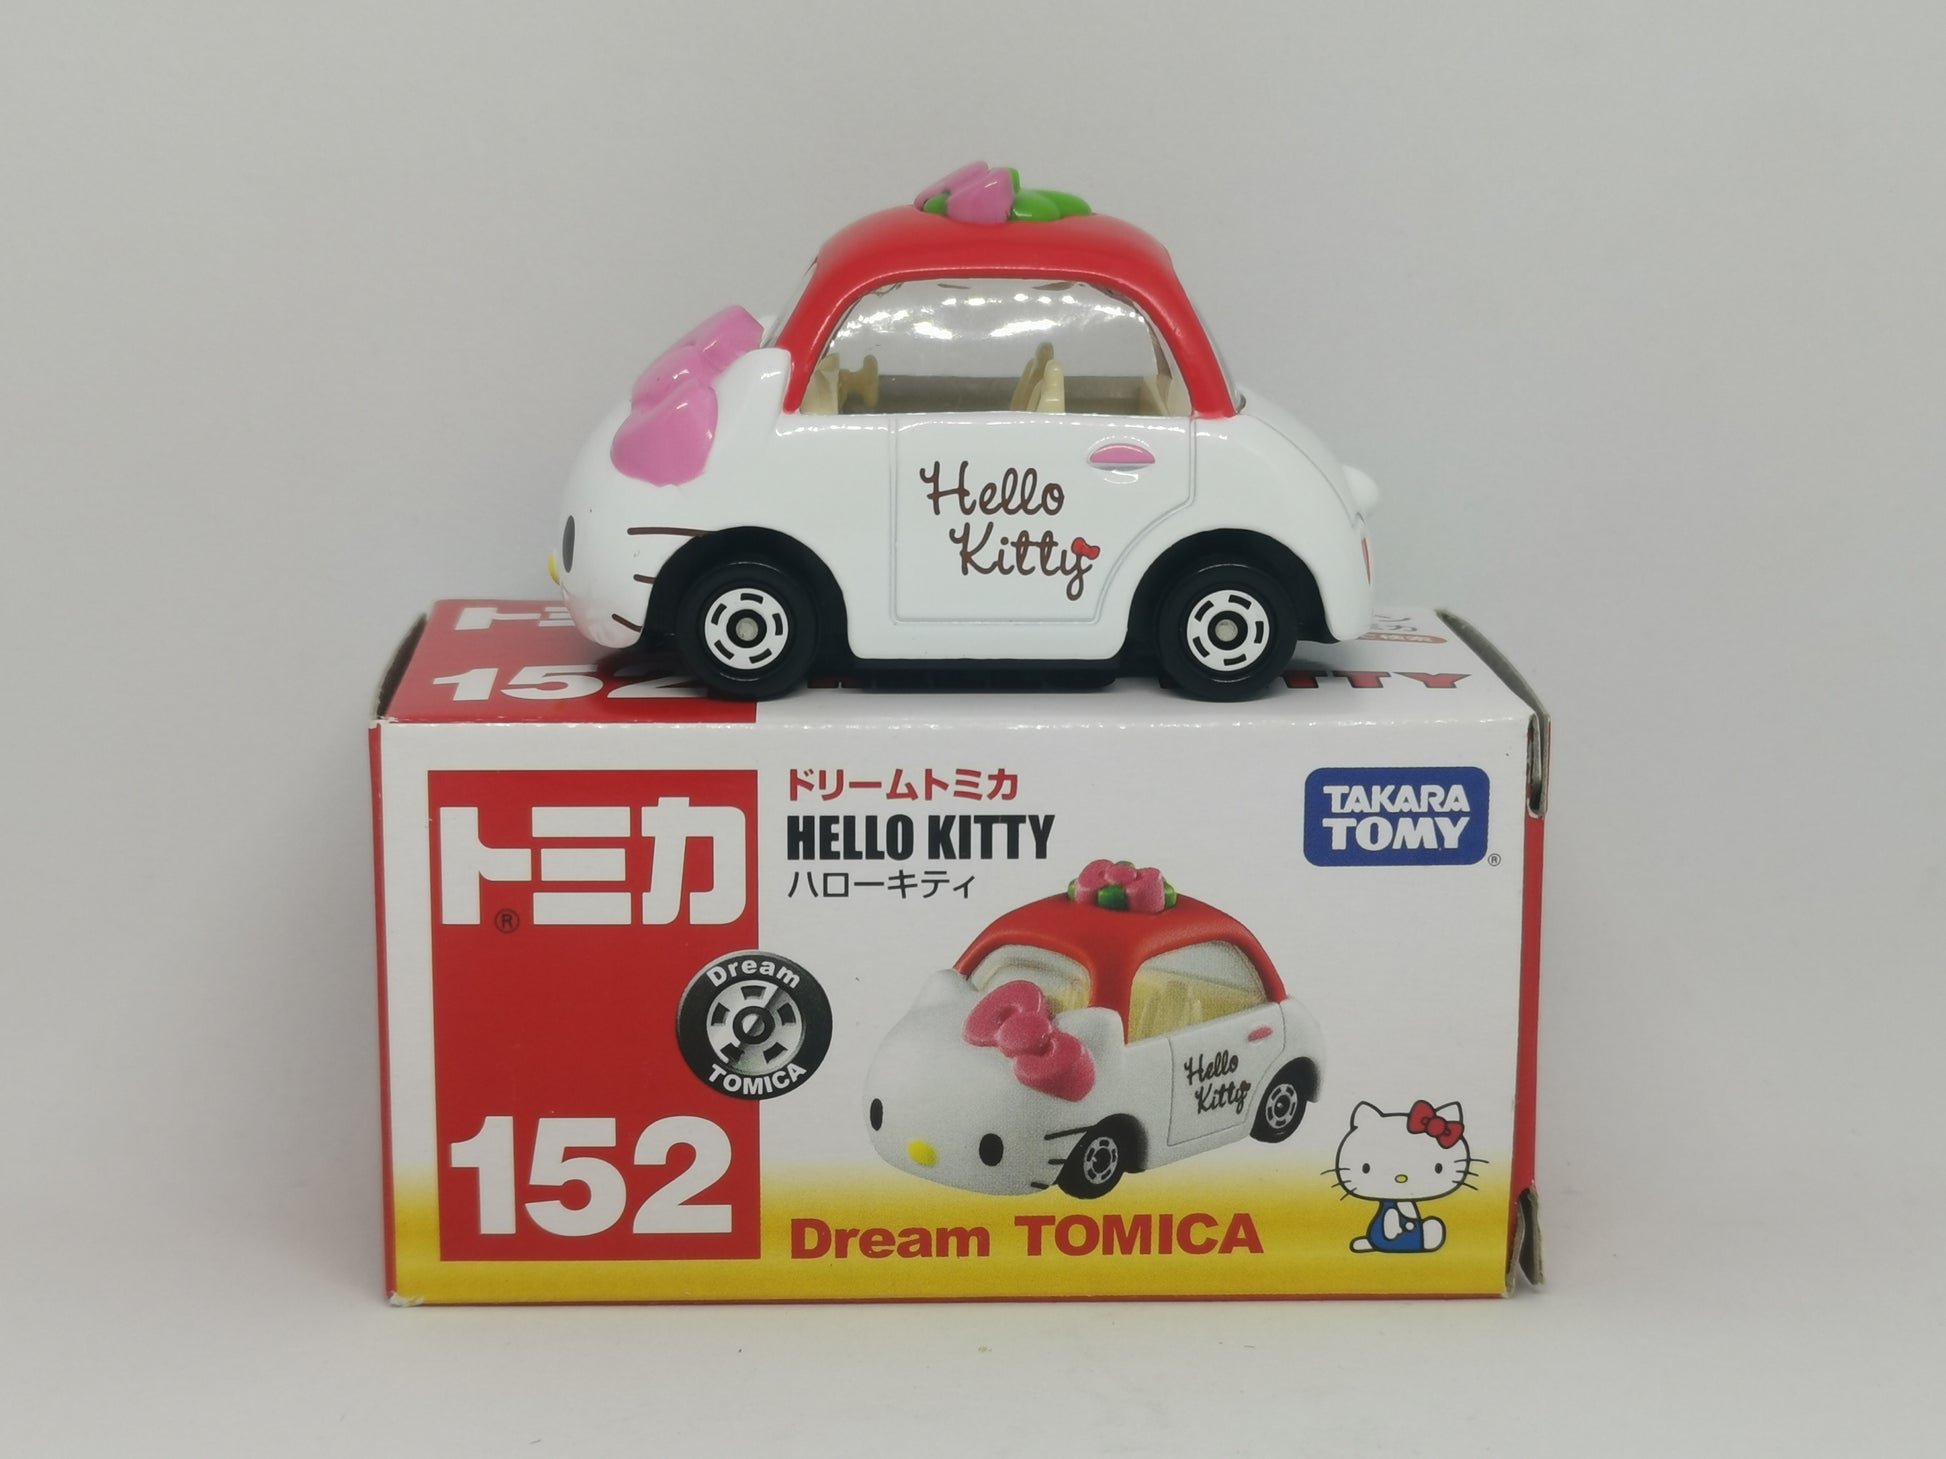 2012 Dream Tomica #152 Hello Kitty Takara Tomy